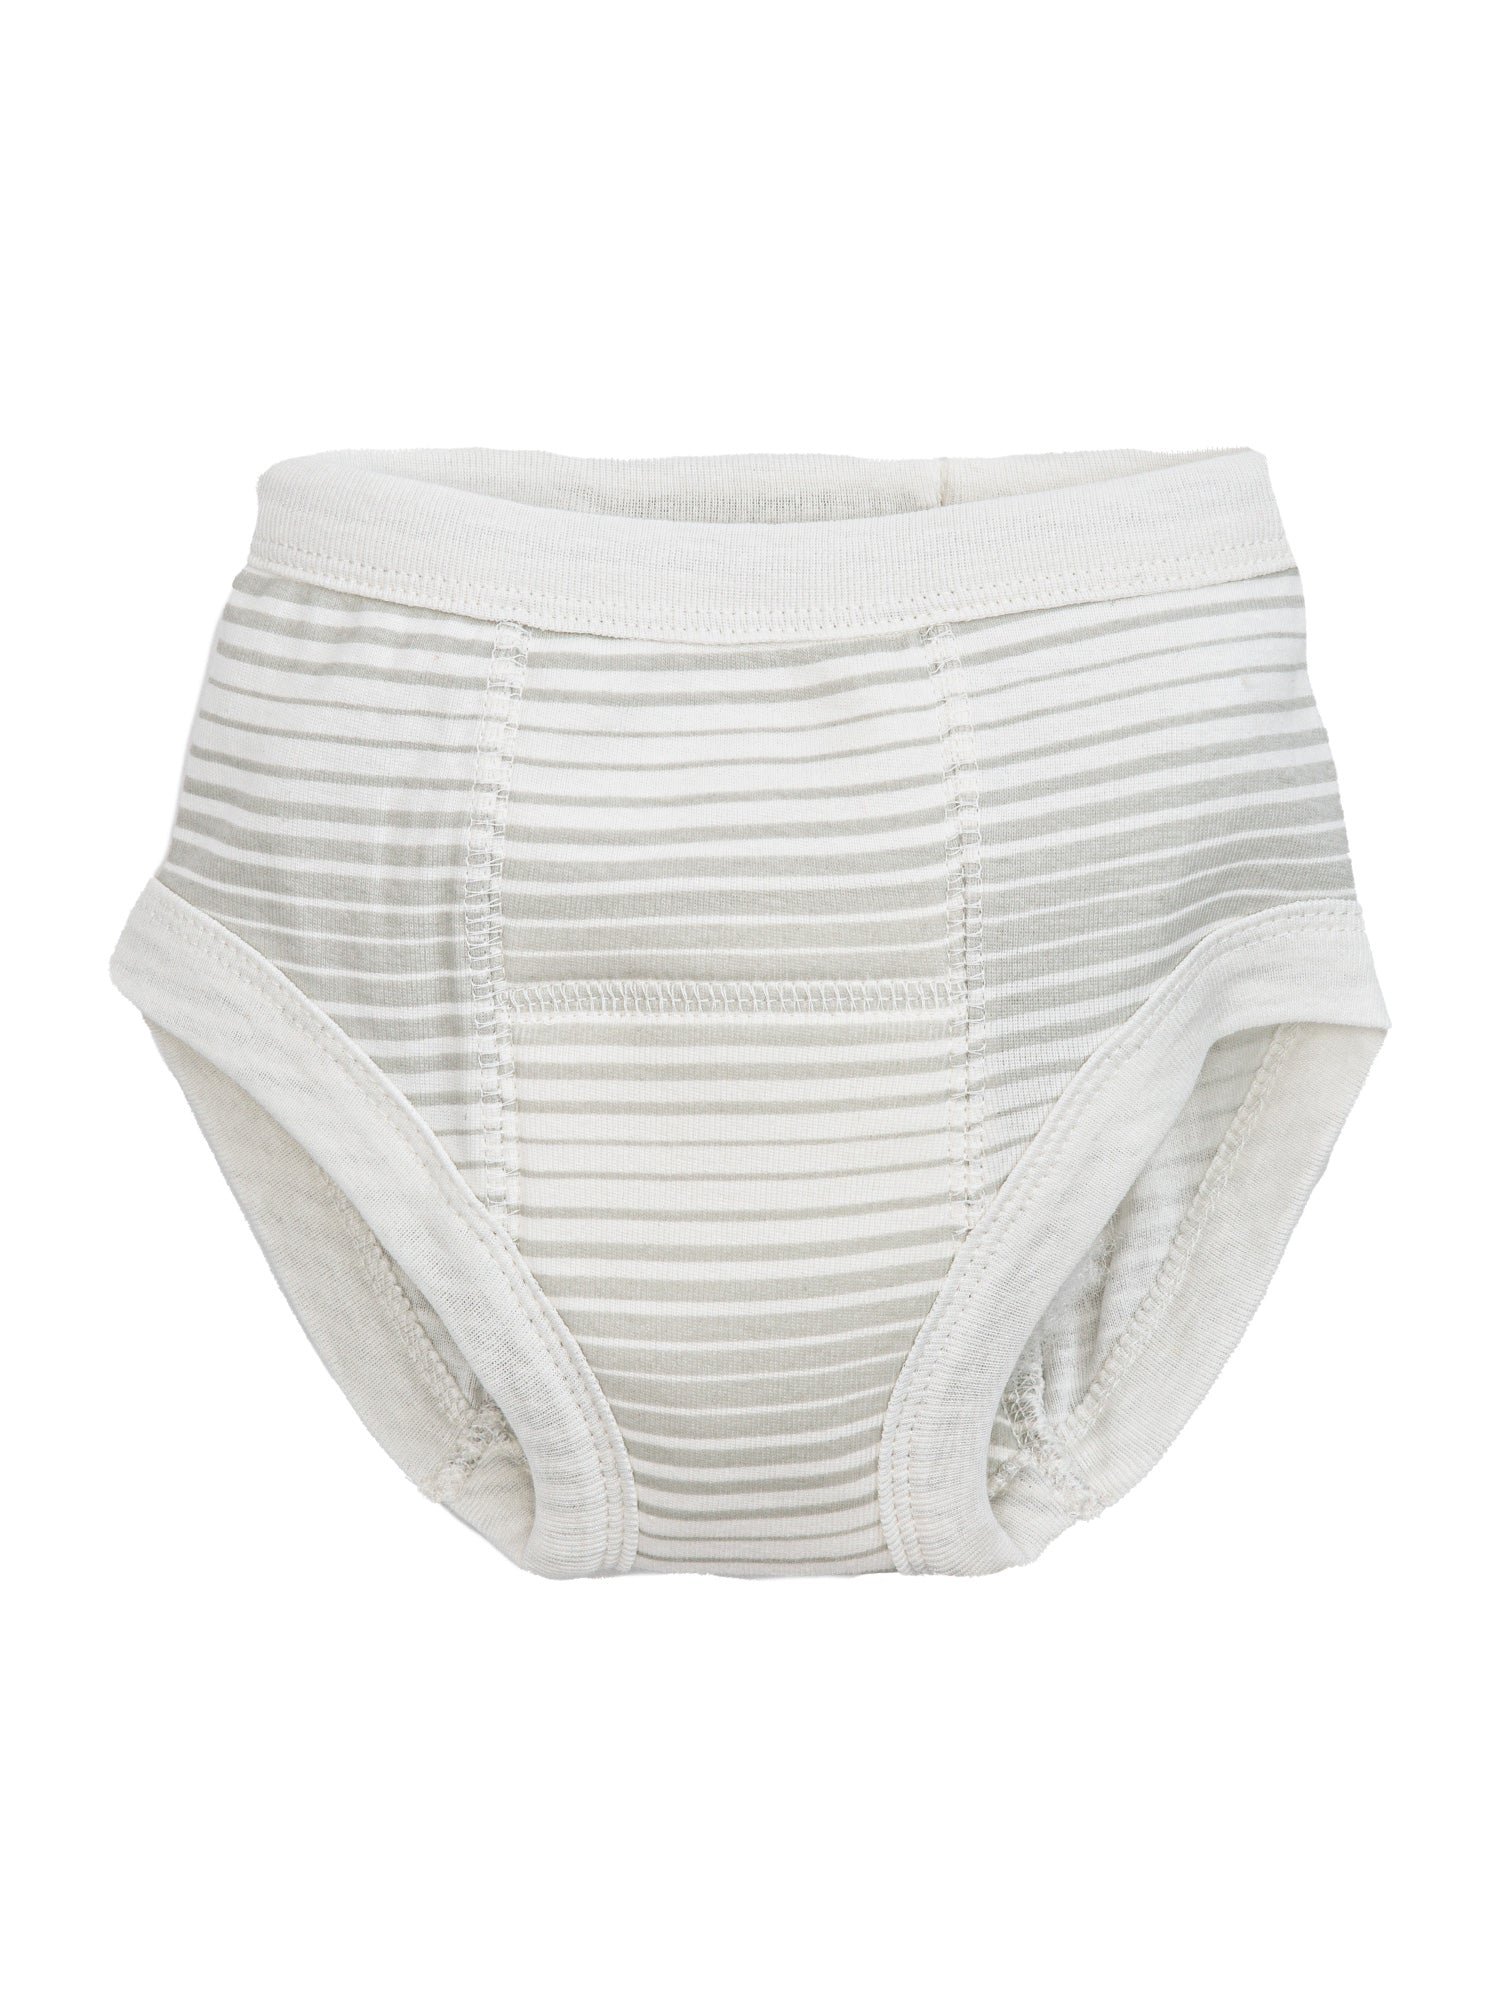 Grey Striped Potty Training Underwear